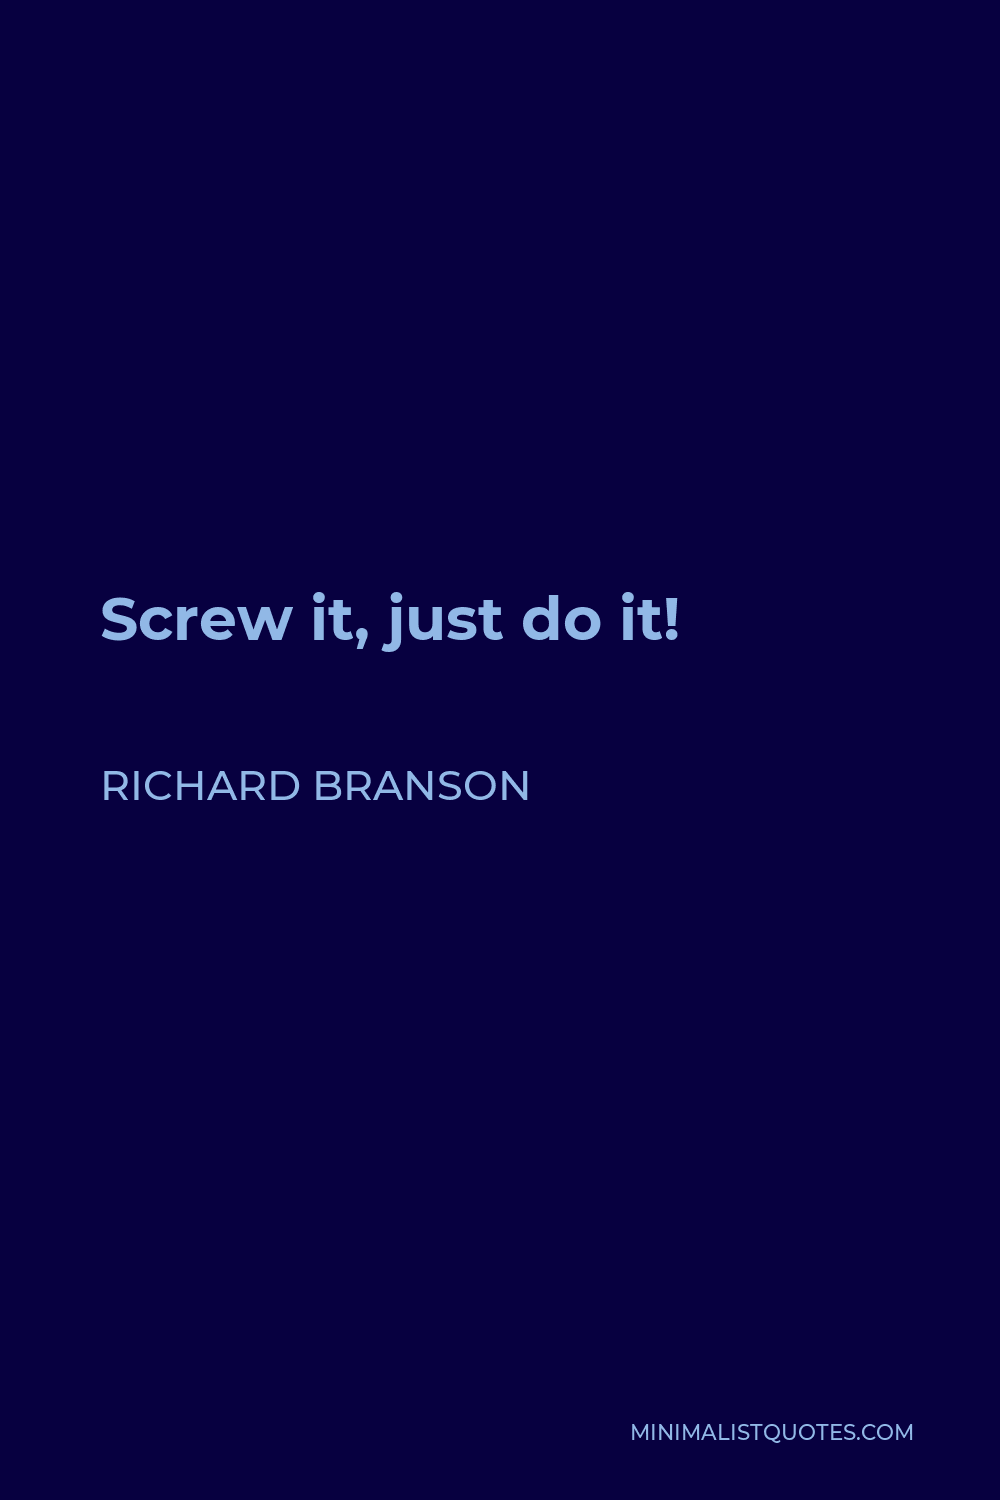 Richard Branson Quote - Screw it, just do it!